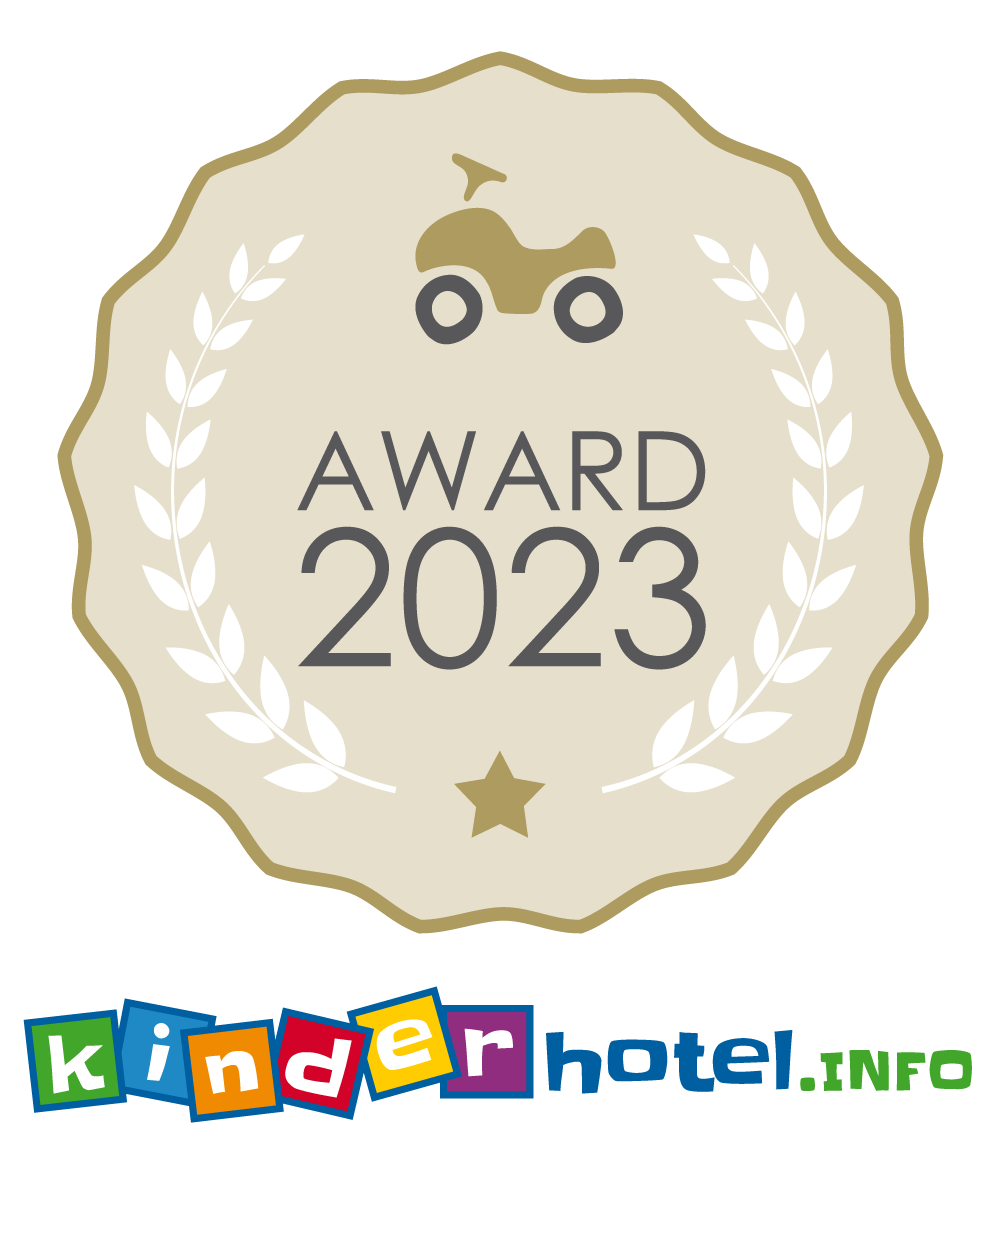 Kinderhotel.info-award